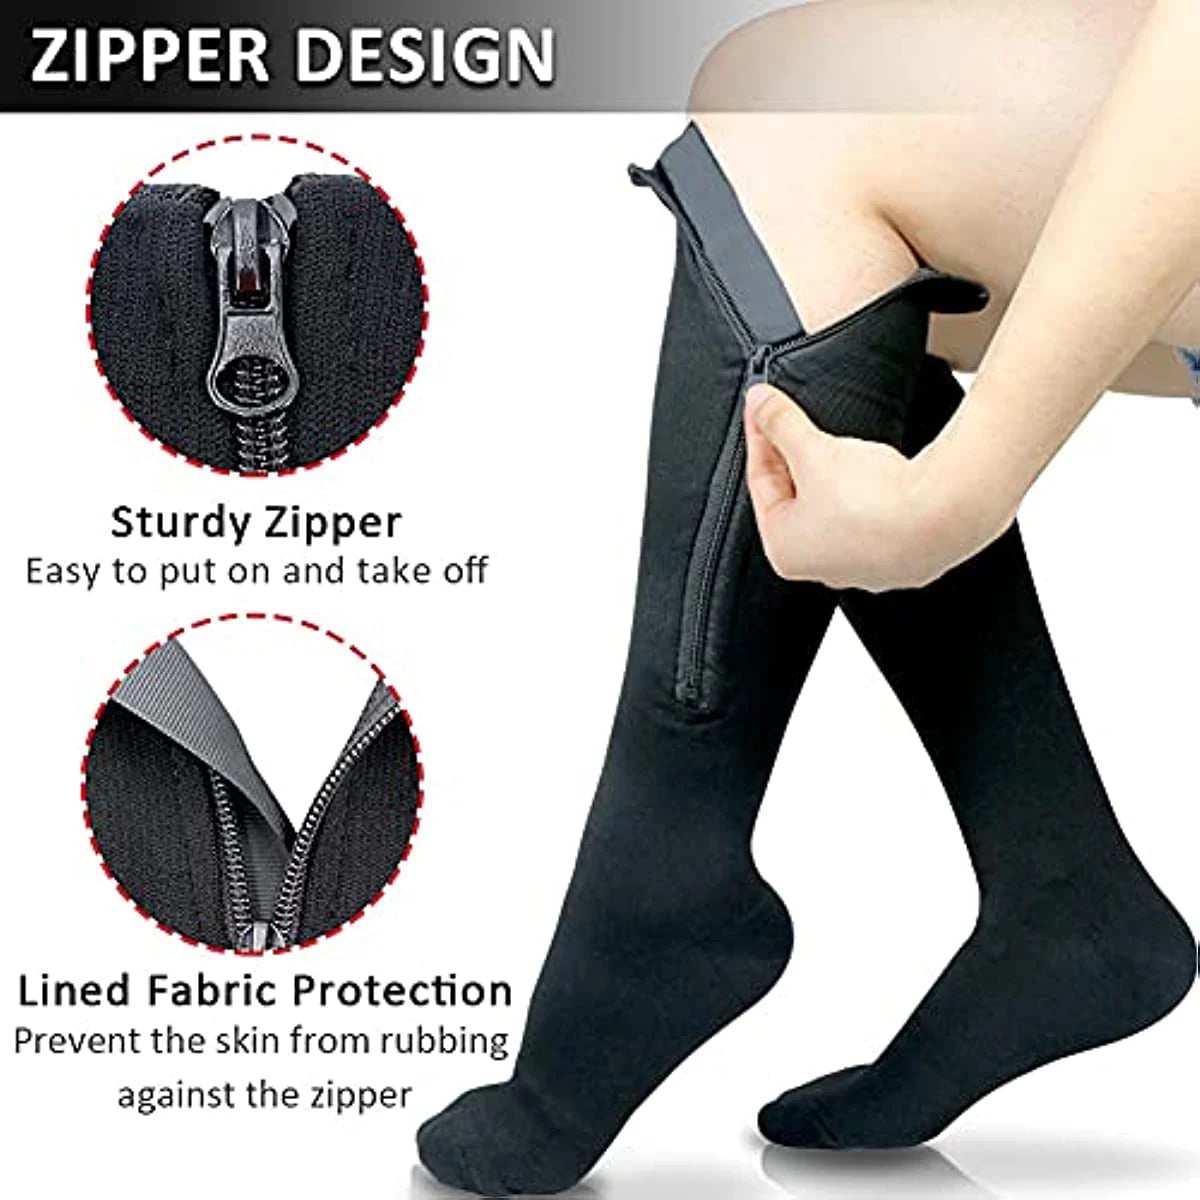 Brothock Medical Zipper Compression Socks Women Men High Elasticity Nylon Closed Toe Pressure Stocking for Edema Varicose Veins